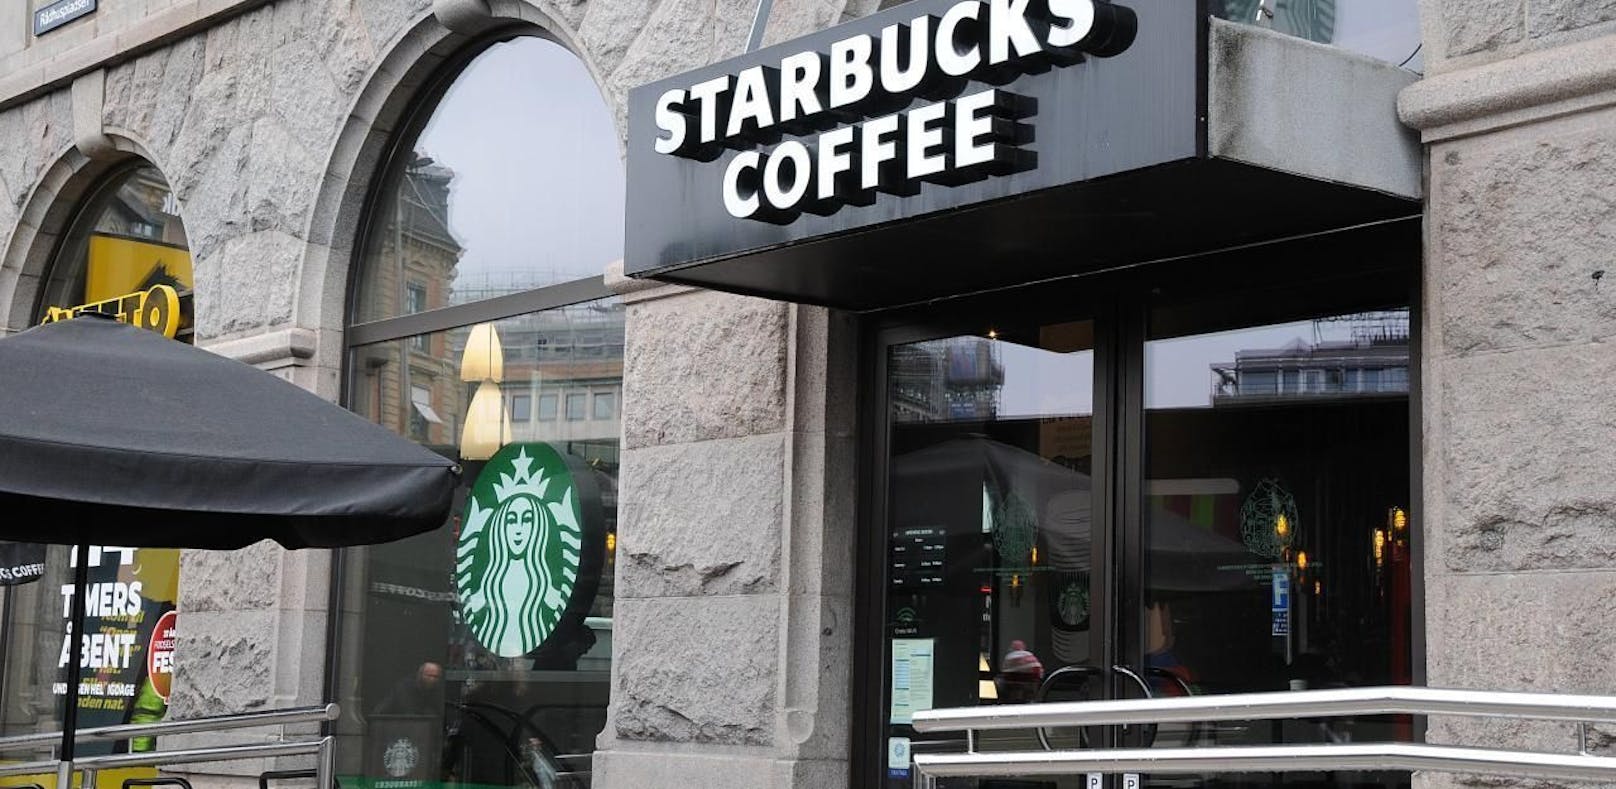 Nichts bestellt: Starbucks ließ Männer verhaften